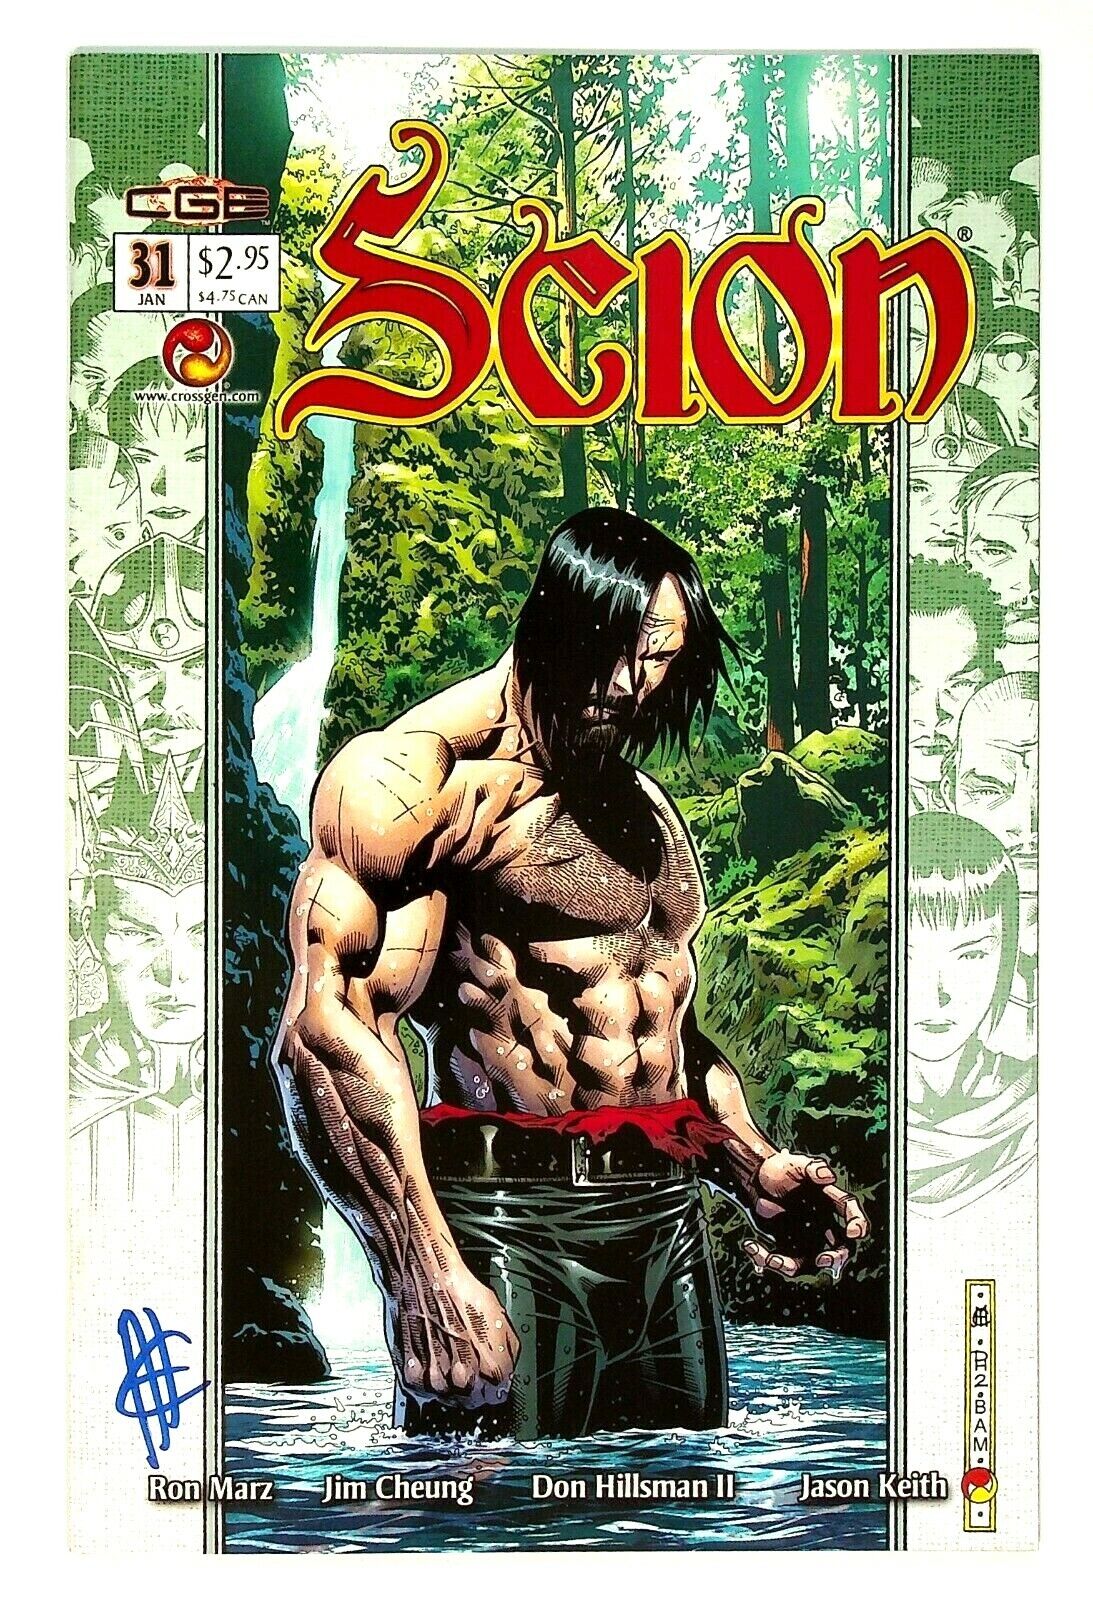 Scion #31 Signed by Jim Cheung CrossGen Comics